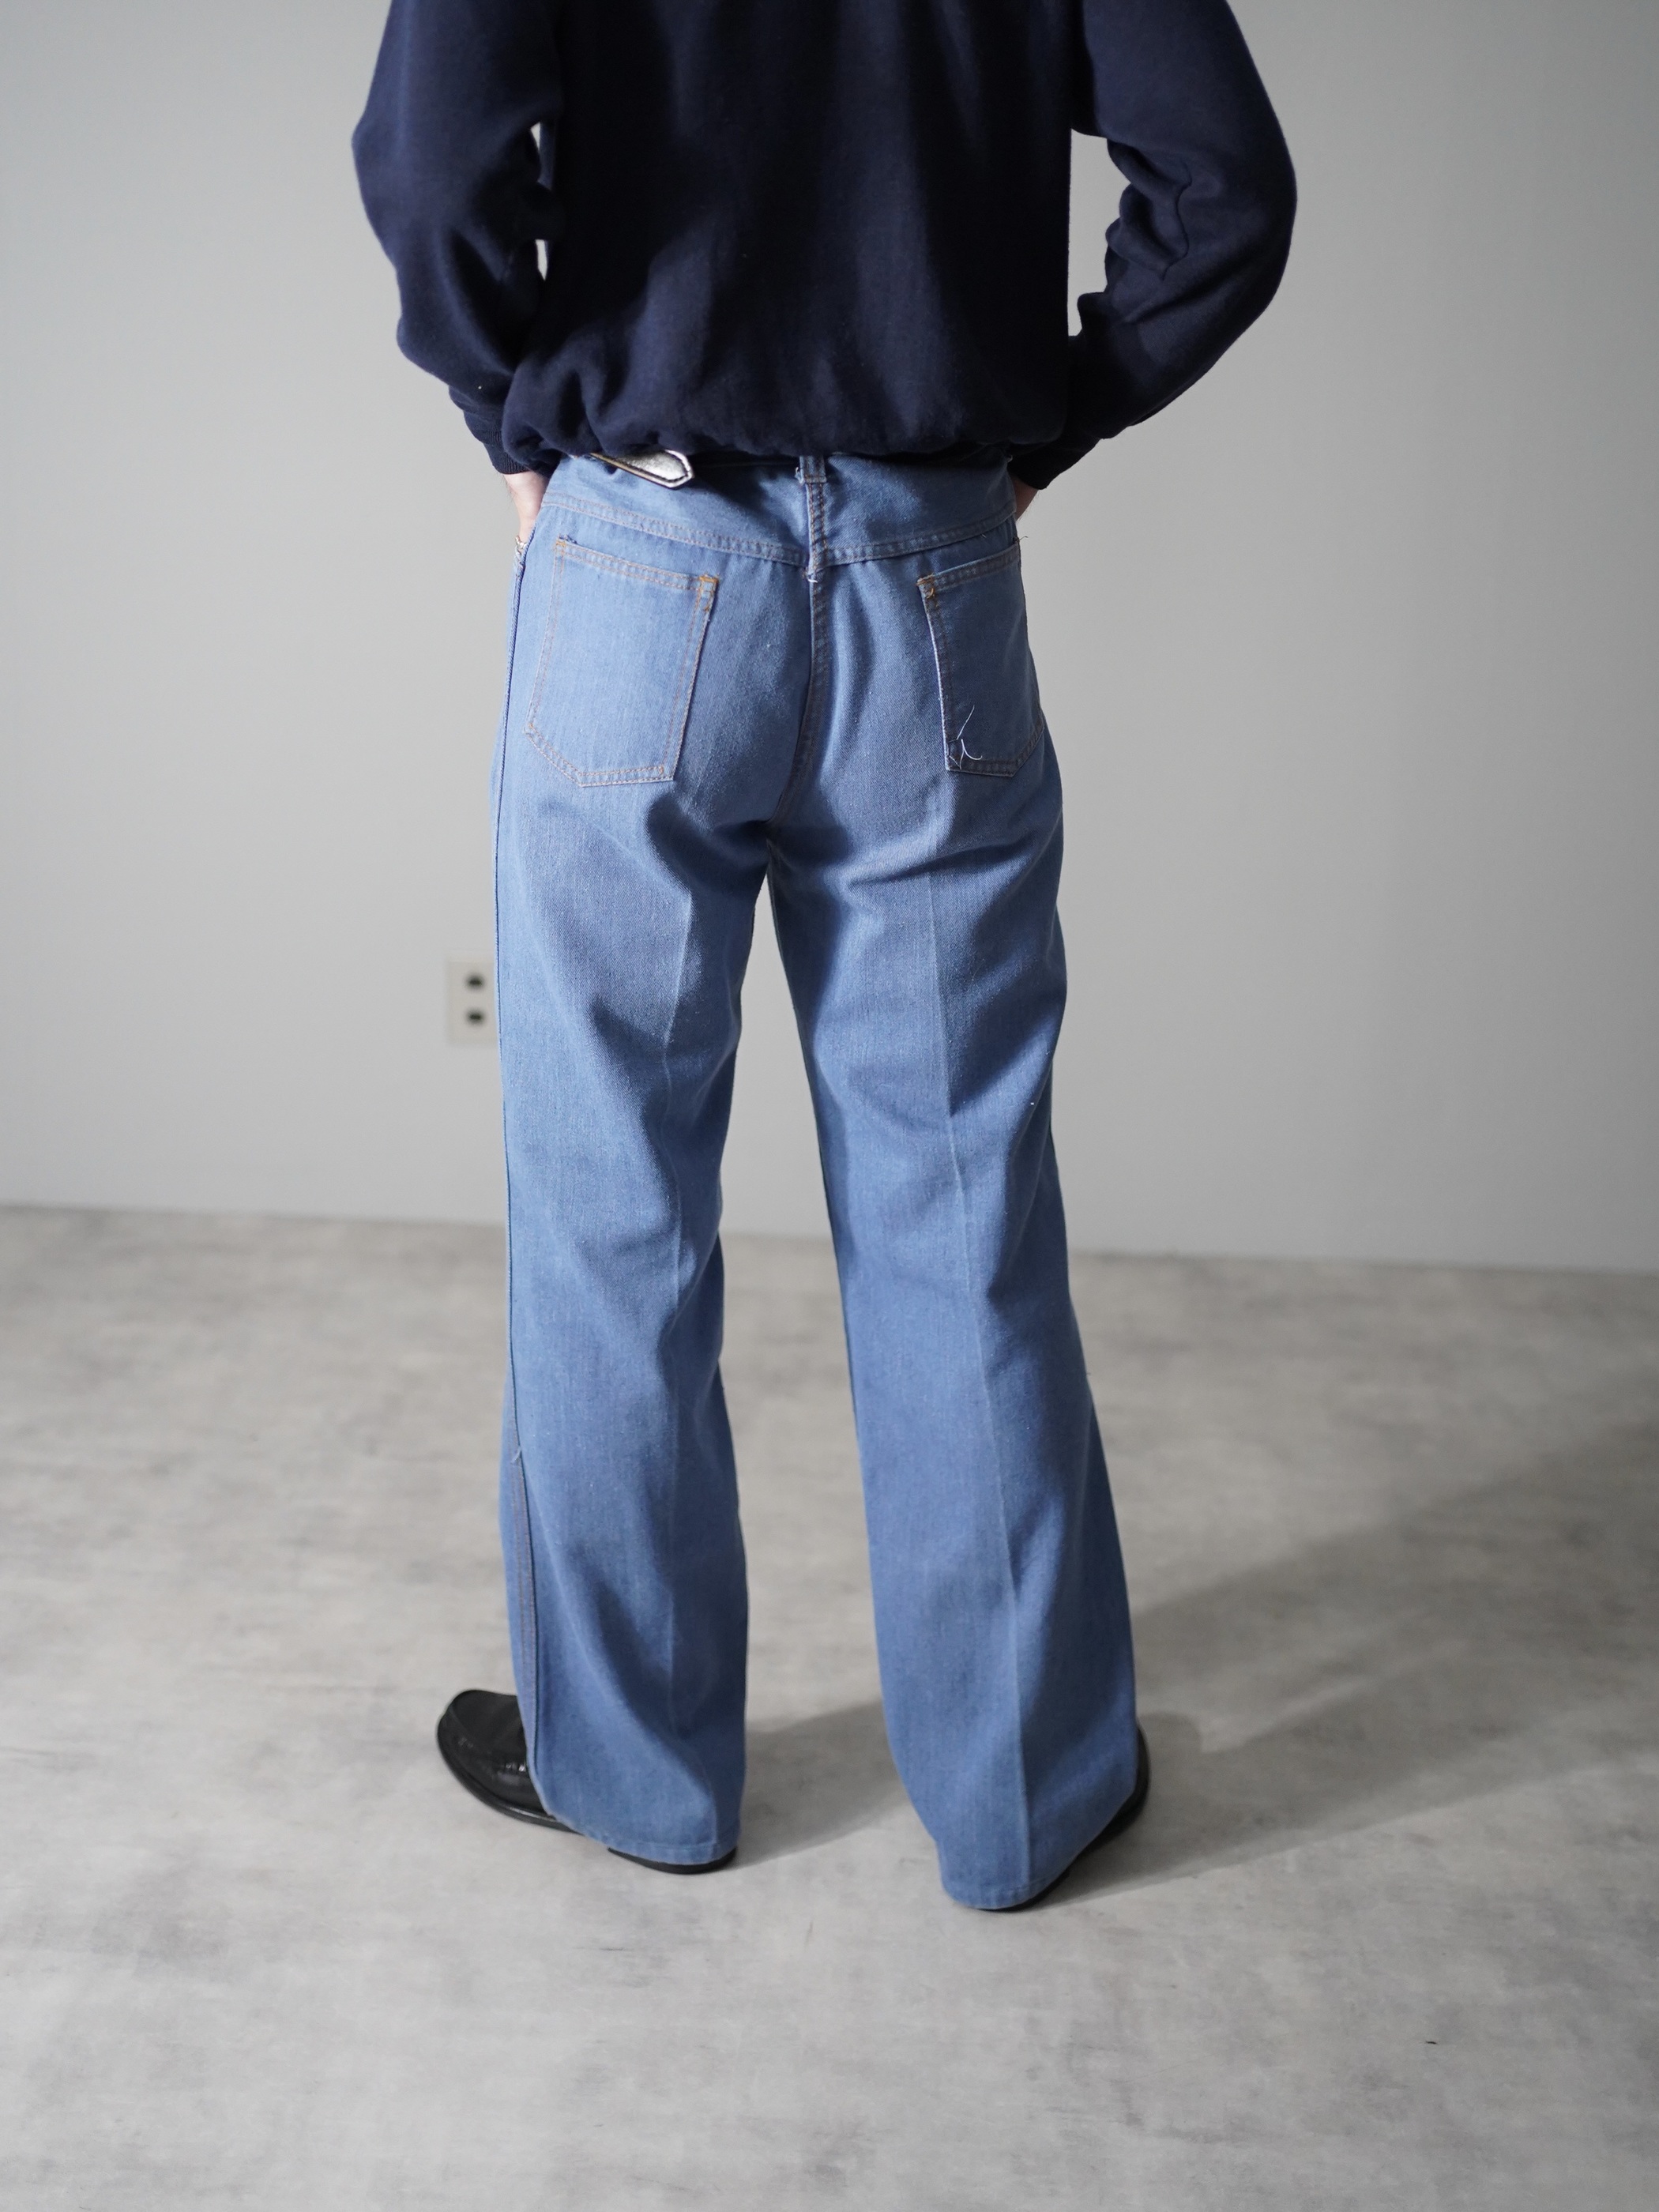 1970-80's Poly cotton denim pants